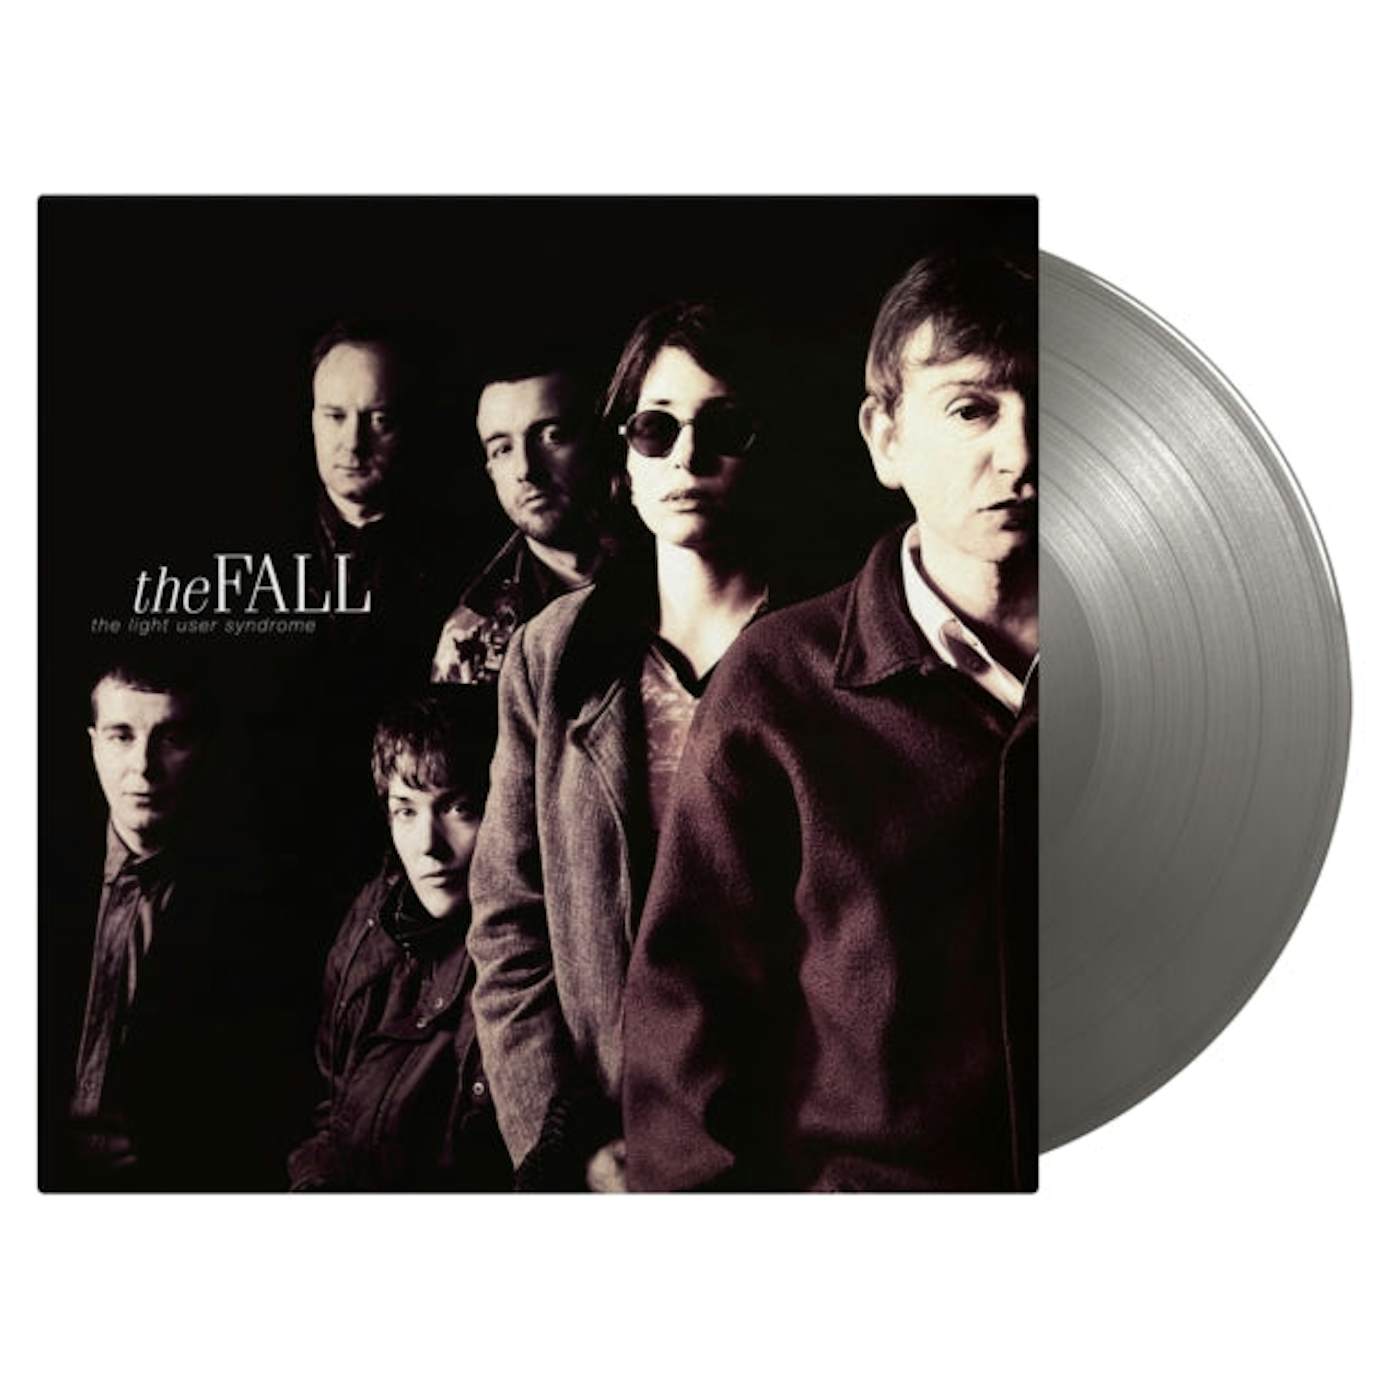 The Fall LP - Light User Syndrome (Coloured Vinyl)